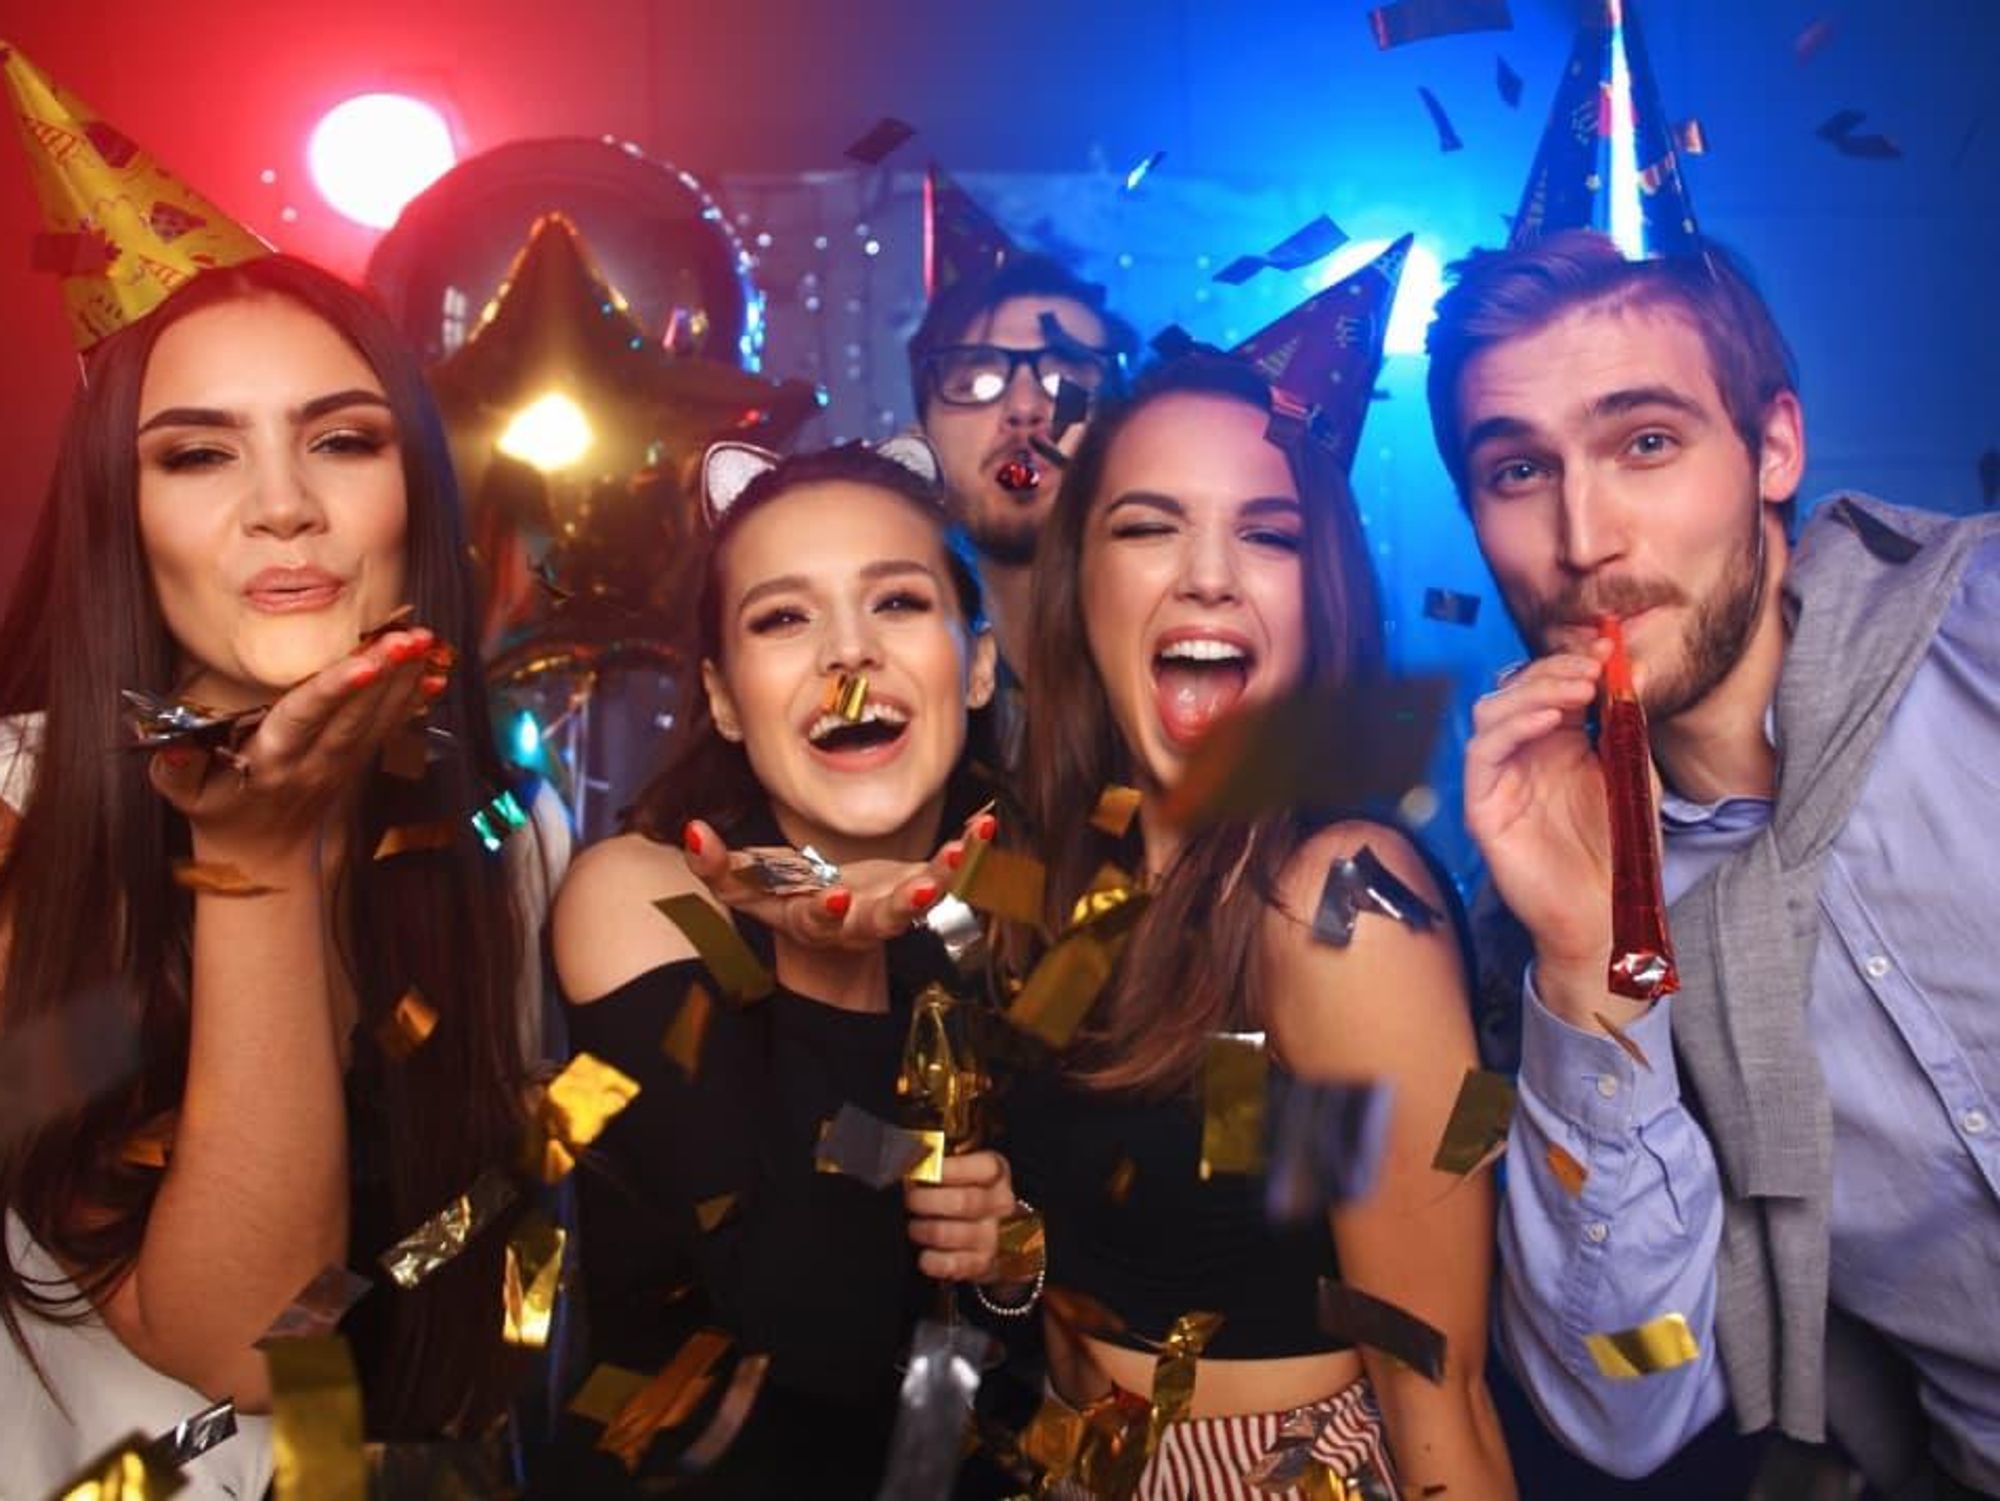 People celebrating New Year's Eve